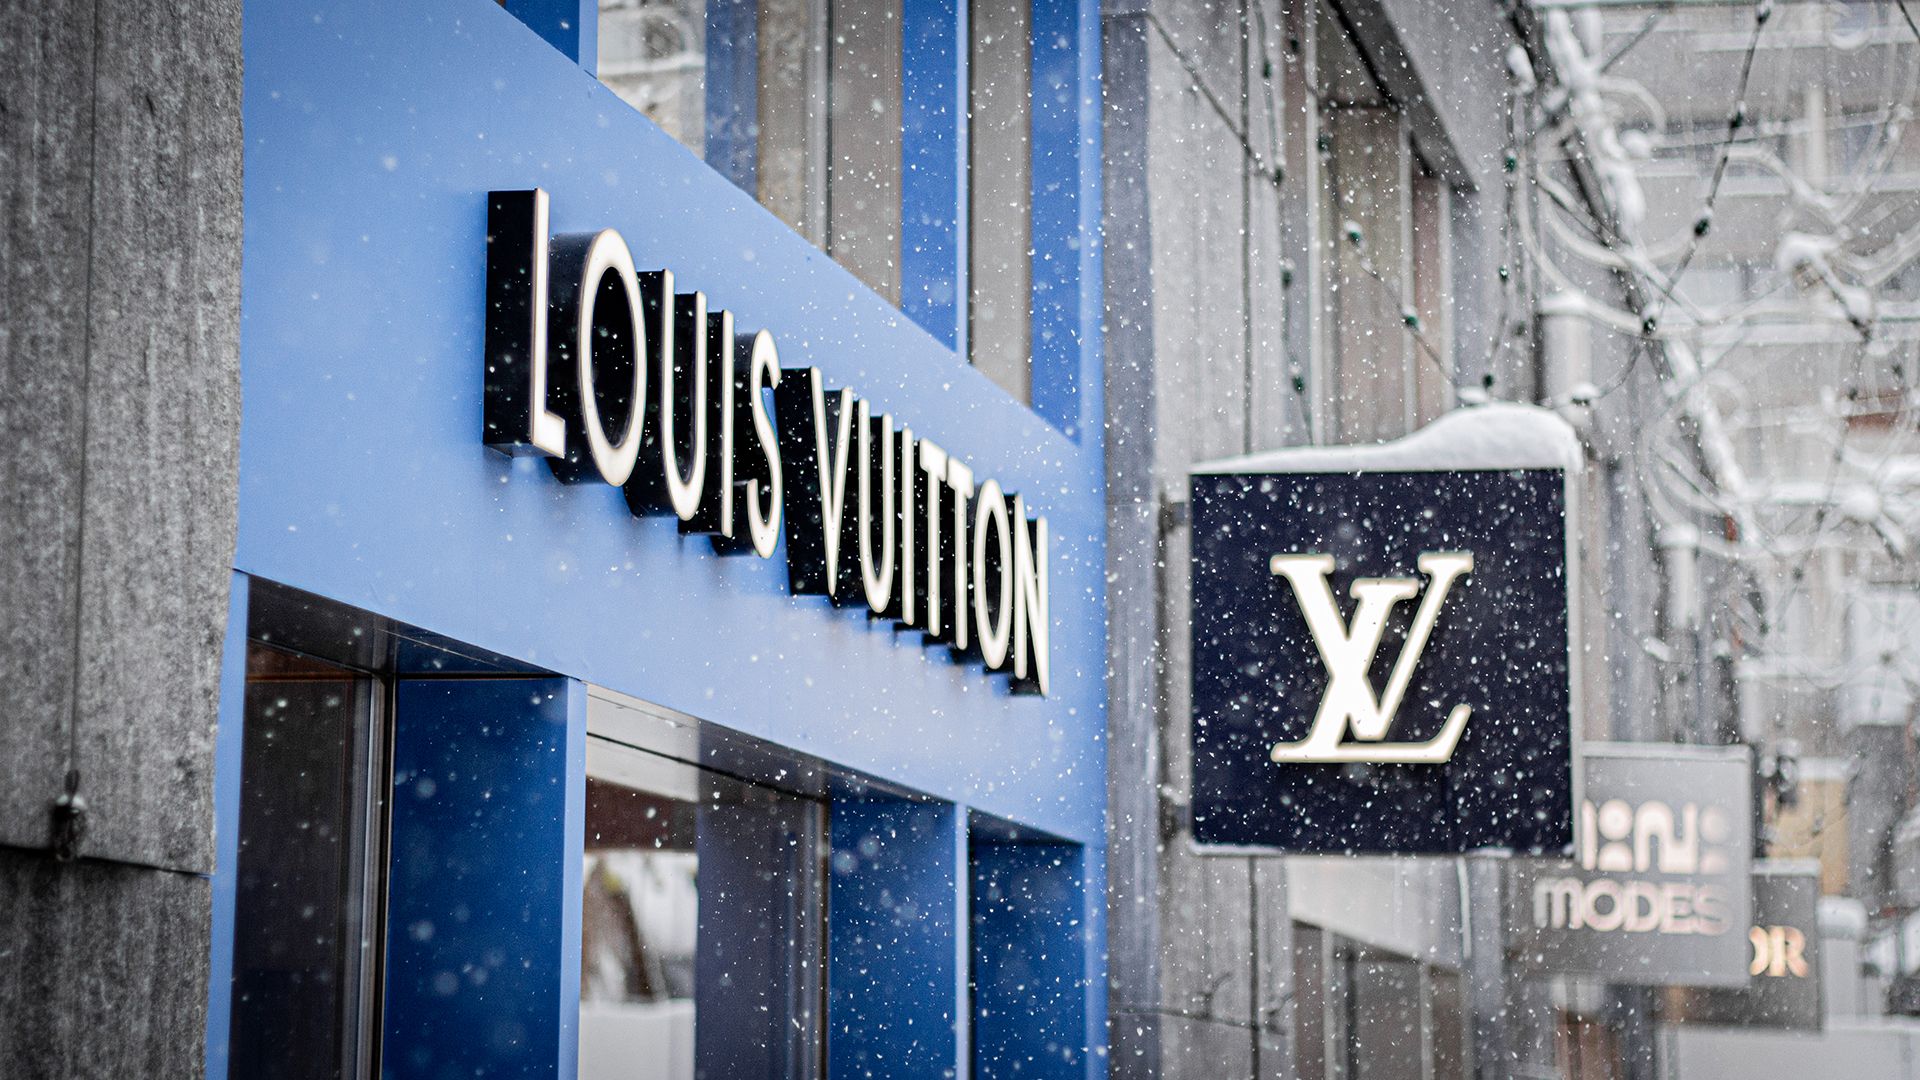 LOUIS VUITTON ST MORITZ Store in St Moritz, Switzerland